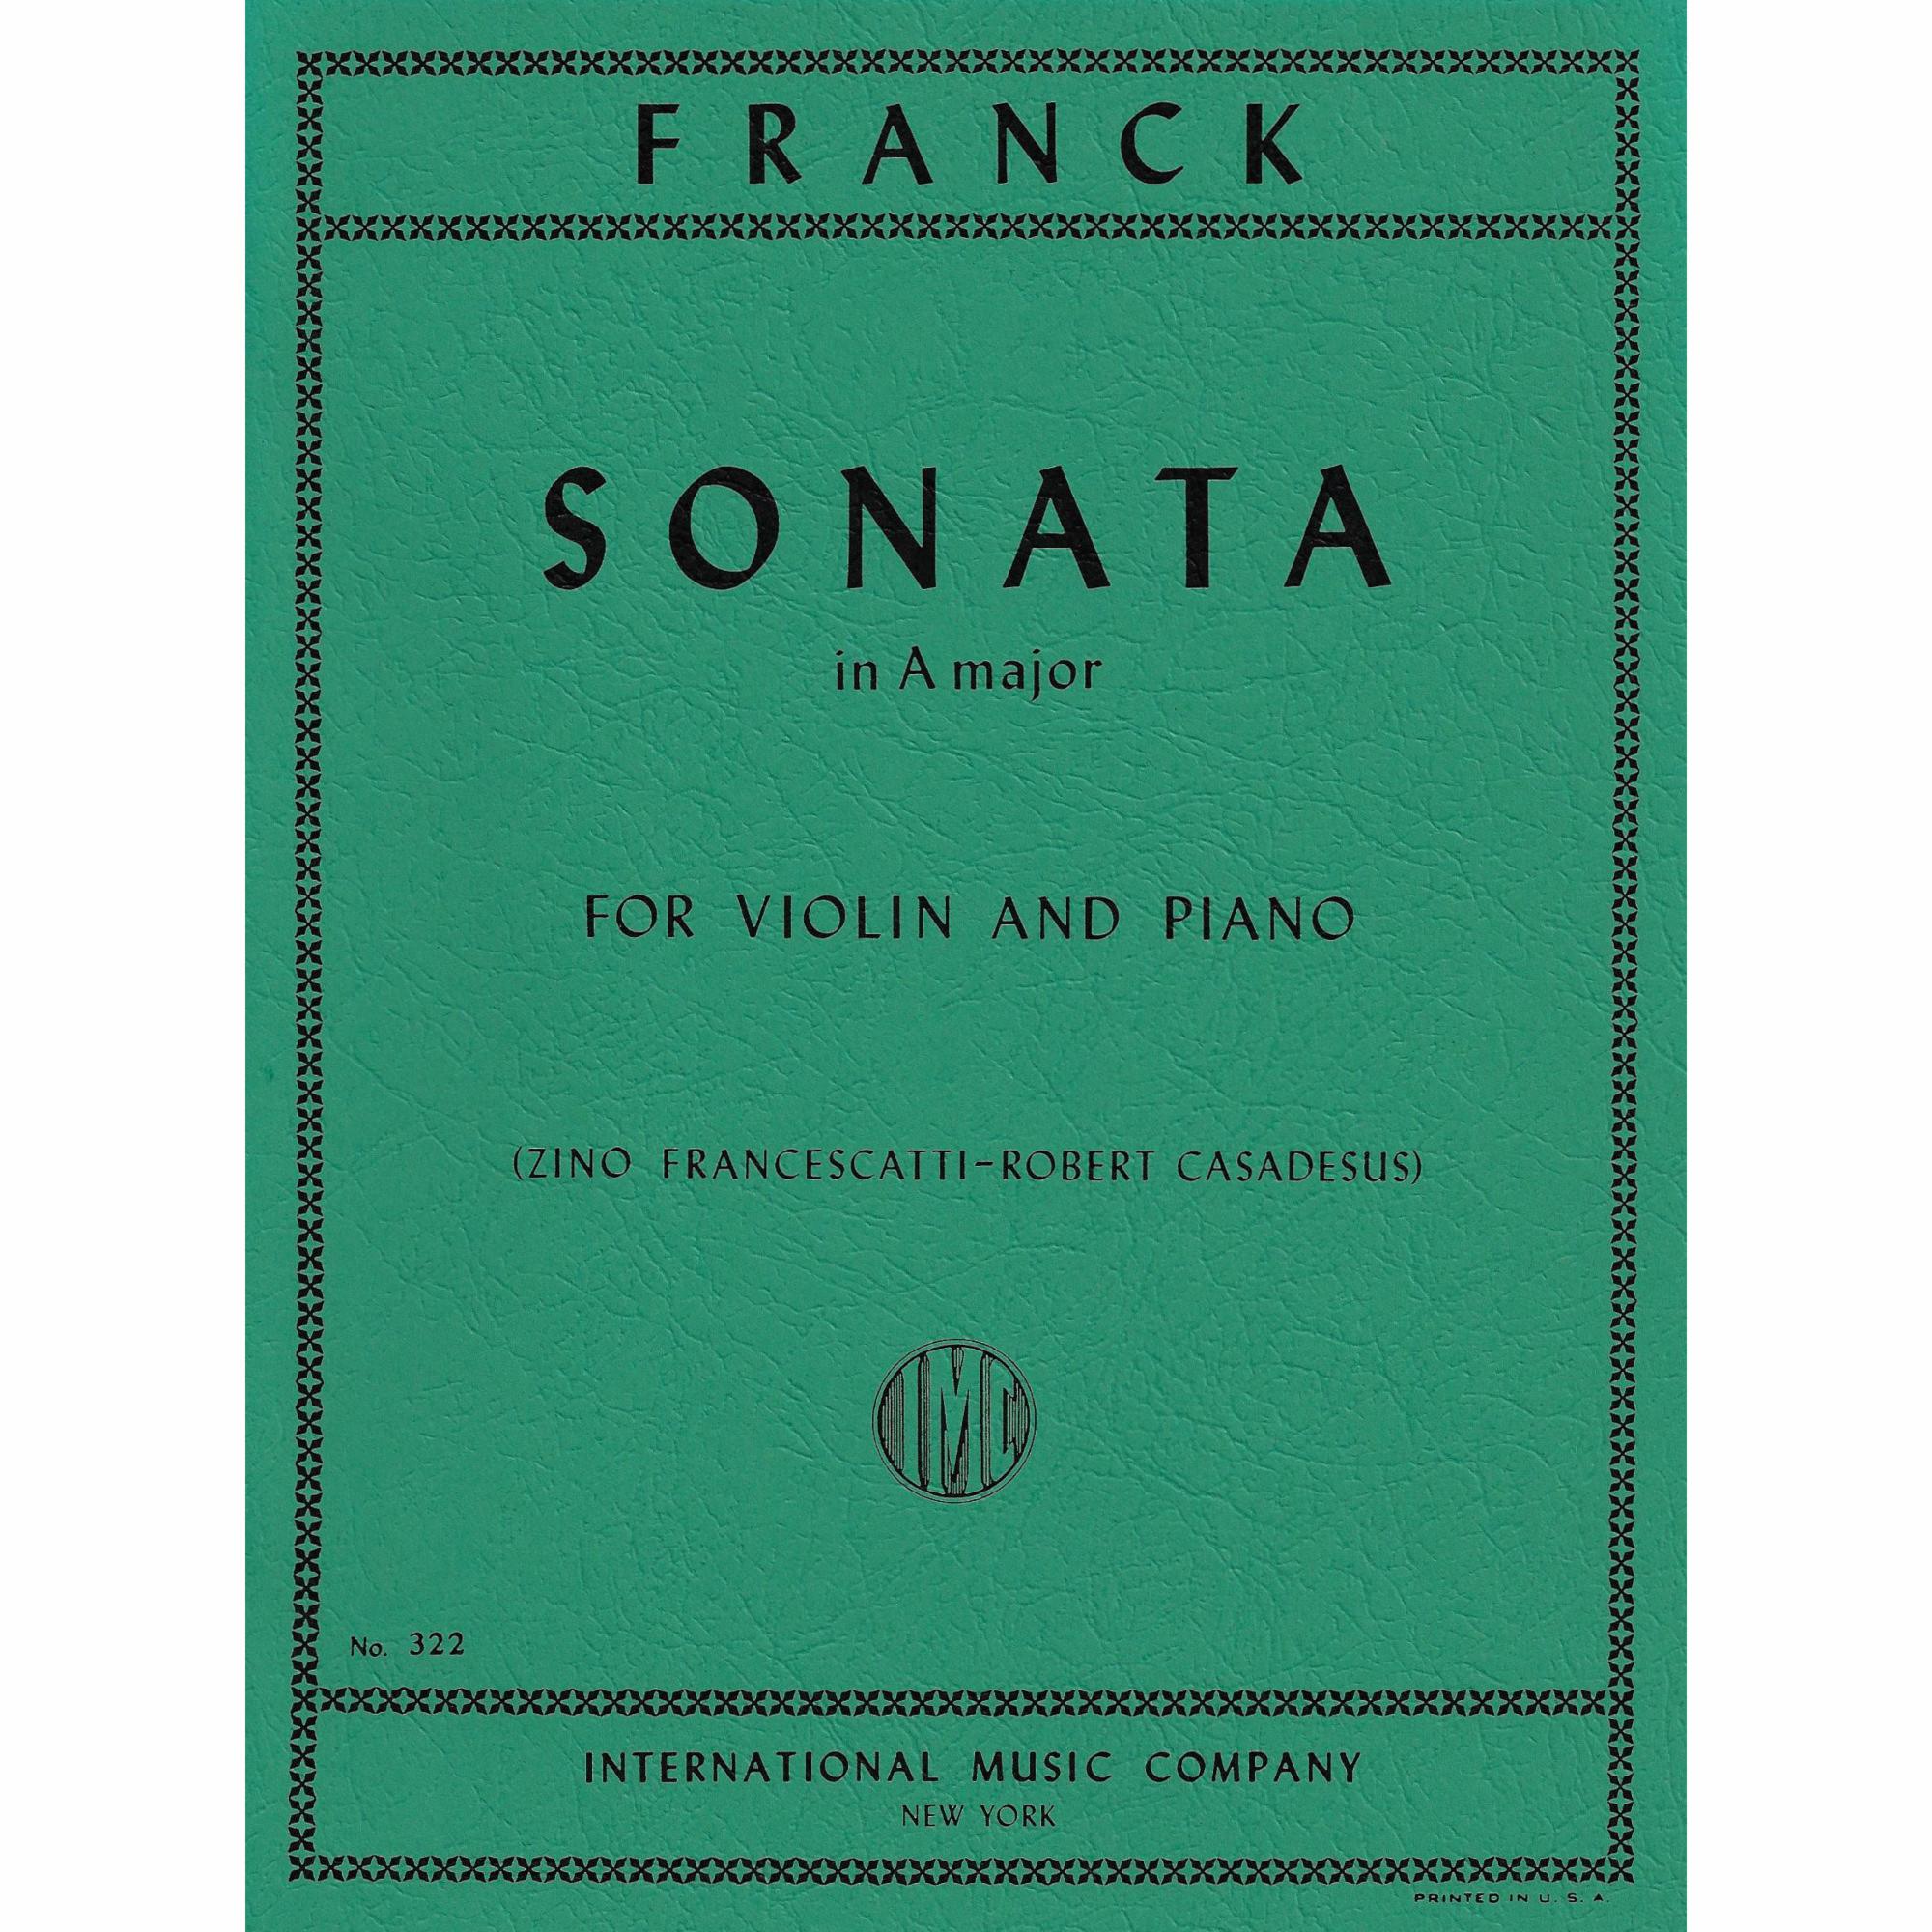 Franck -- Sonata in A Major for Violin and Piano